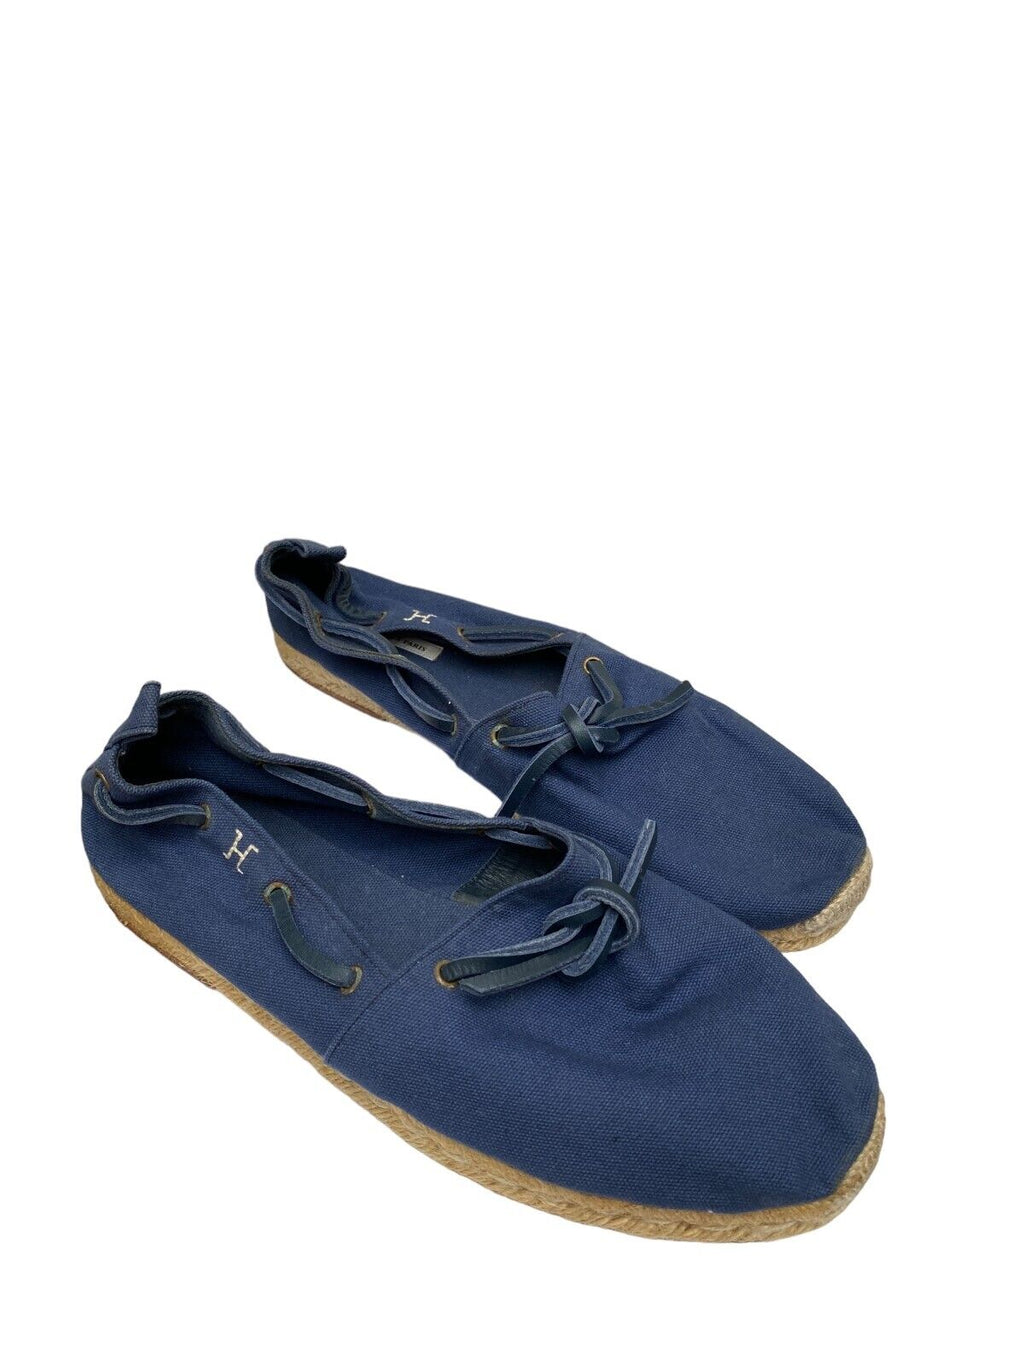 Vintage Blue Espadrilles Size 43 / US 10